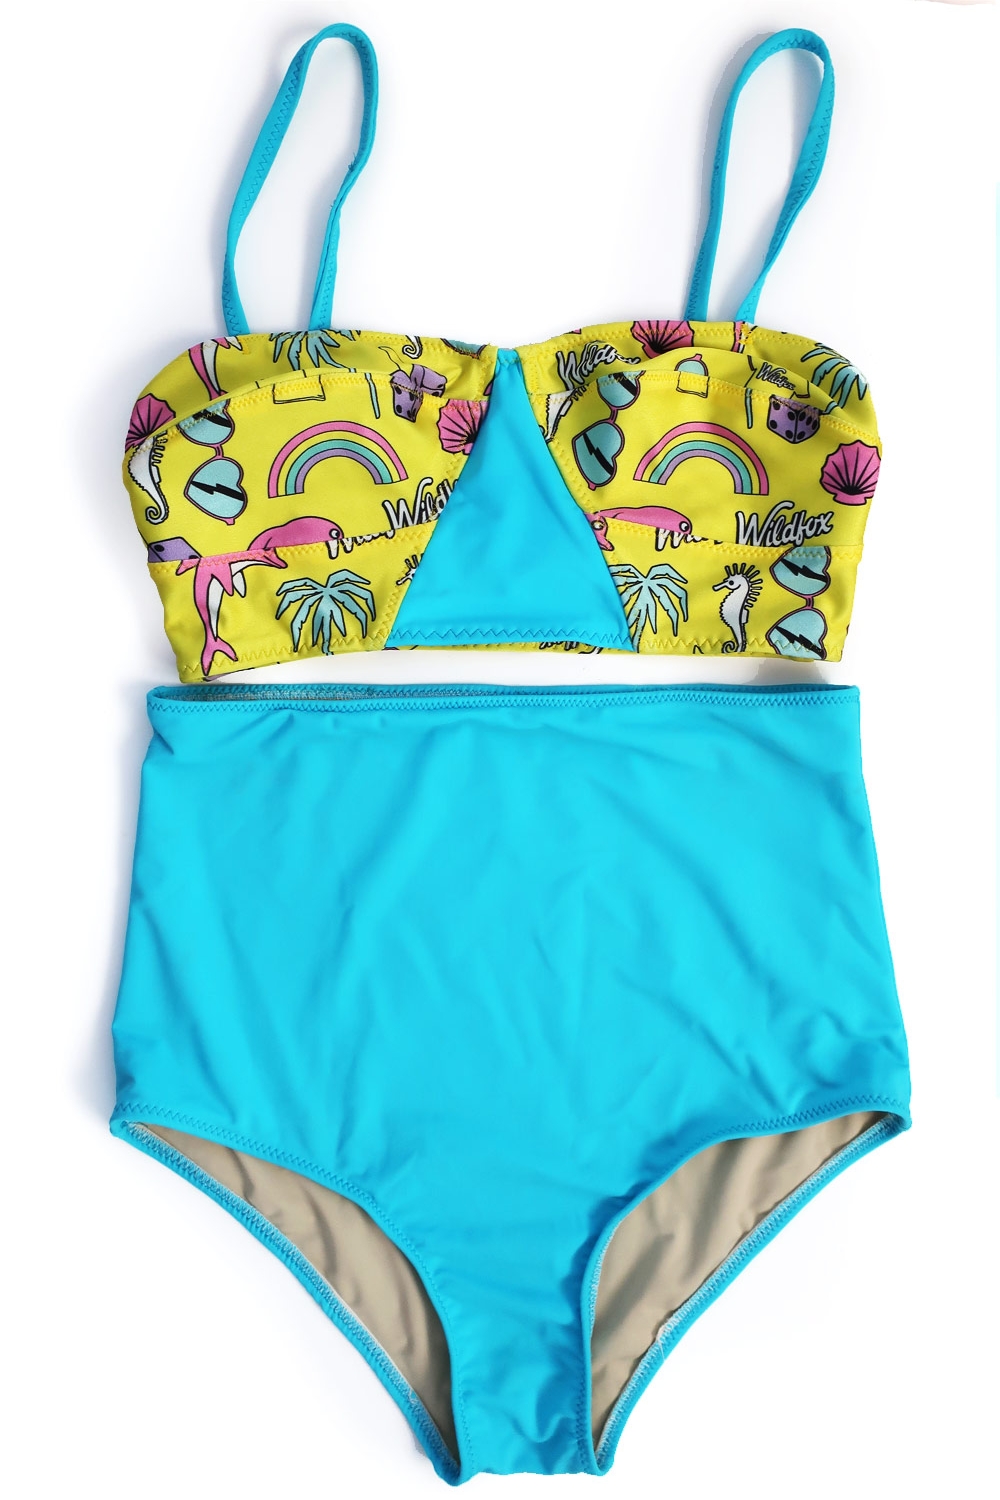 https://images.squarespace-cdn.com/content/v1/5311530fe4b080d644be8ea9/1534779216245-1RASSGLLV8BTQ79NBHHY/DIY+High+Waisted+Bikini+%E2%80%93+Review+of+the+Soma+Swimsuit+by+Papercut+Patterns+%7C+Sew+DIY